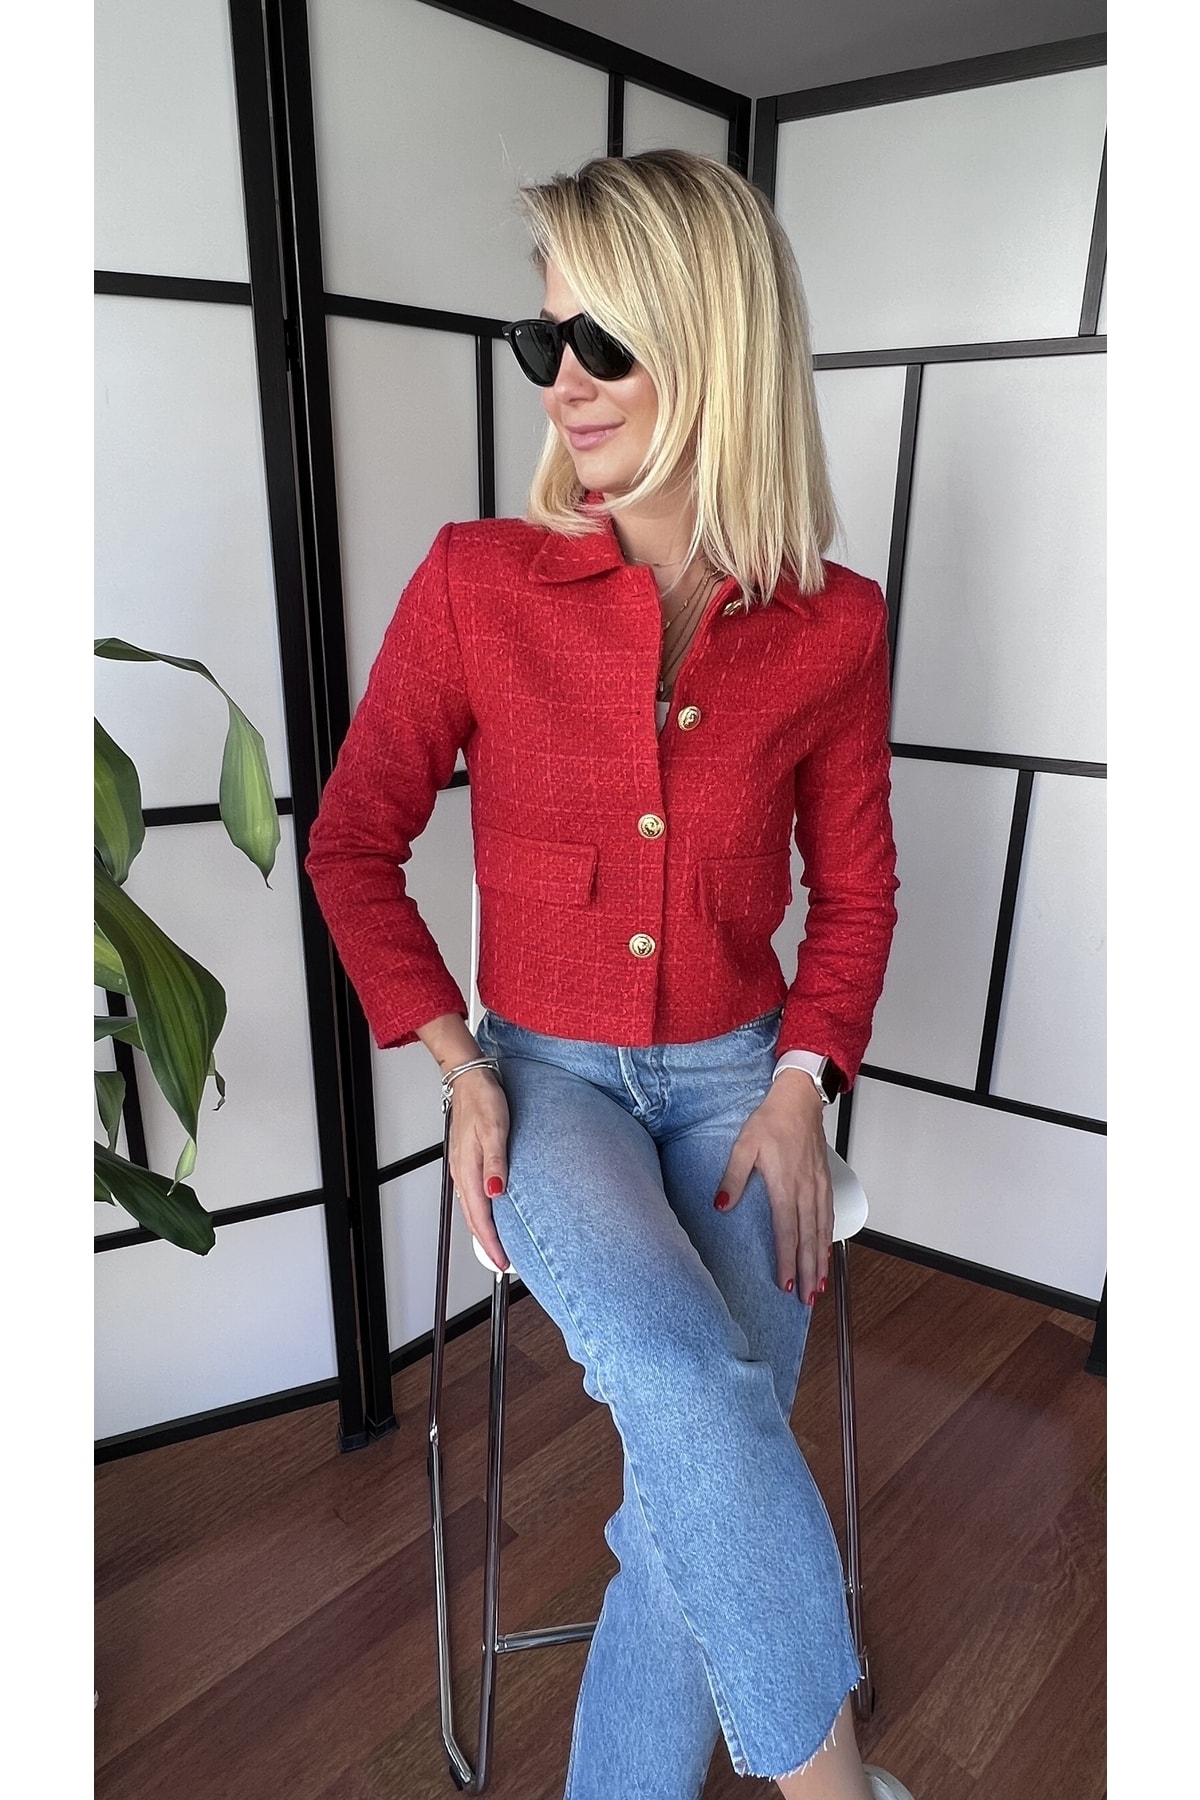 melsy boutique Kırmızı Tüvit Kısa Blazer Ceket